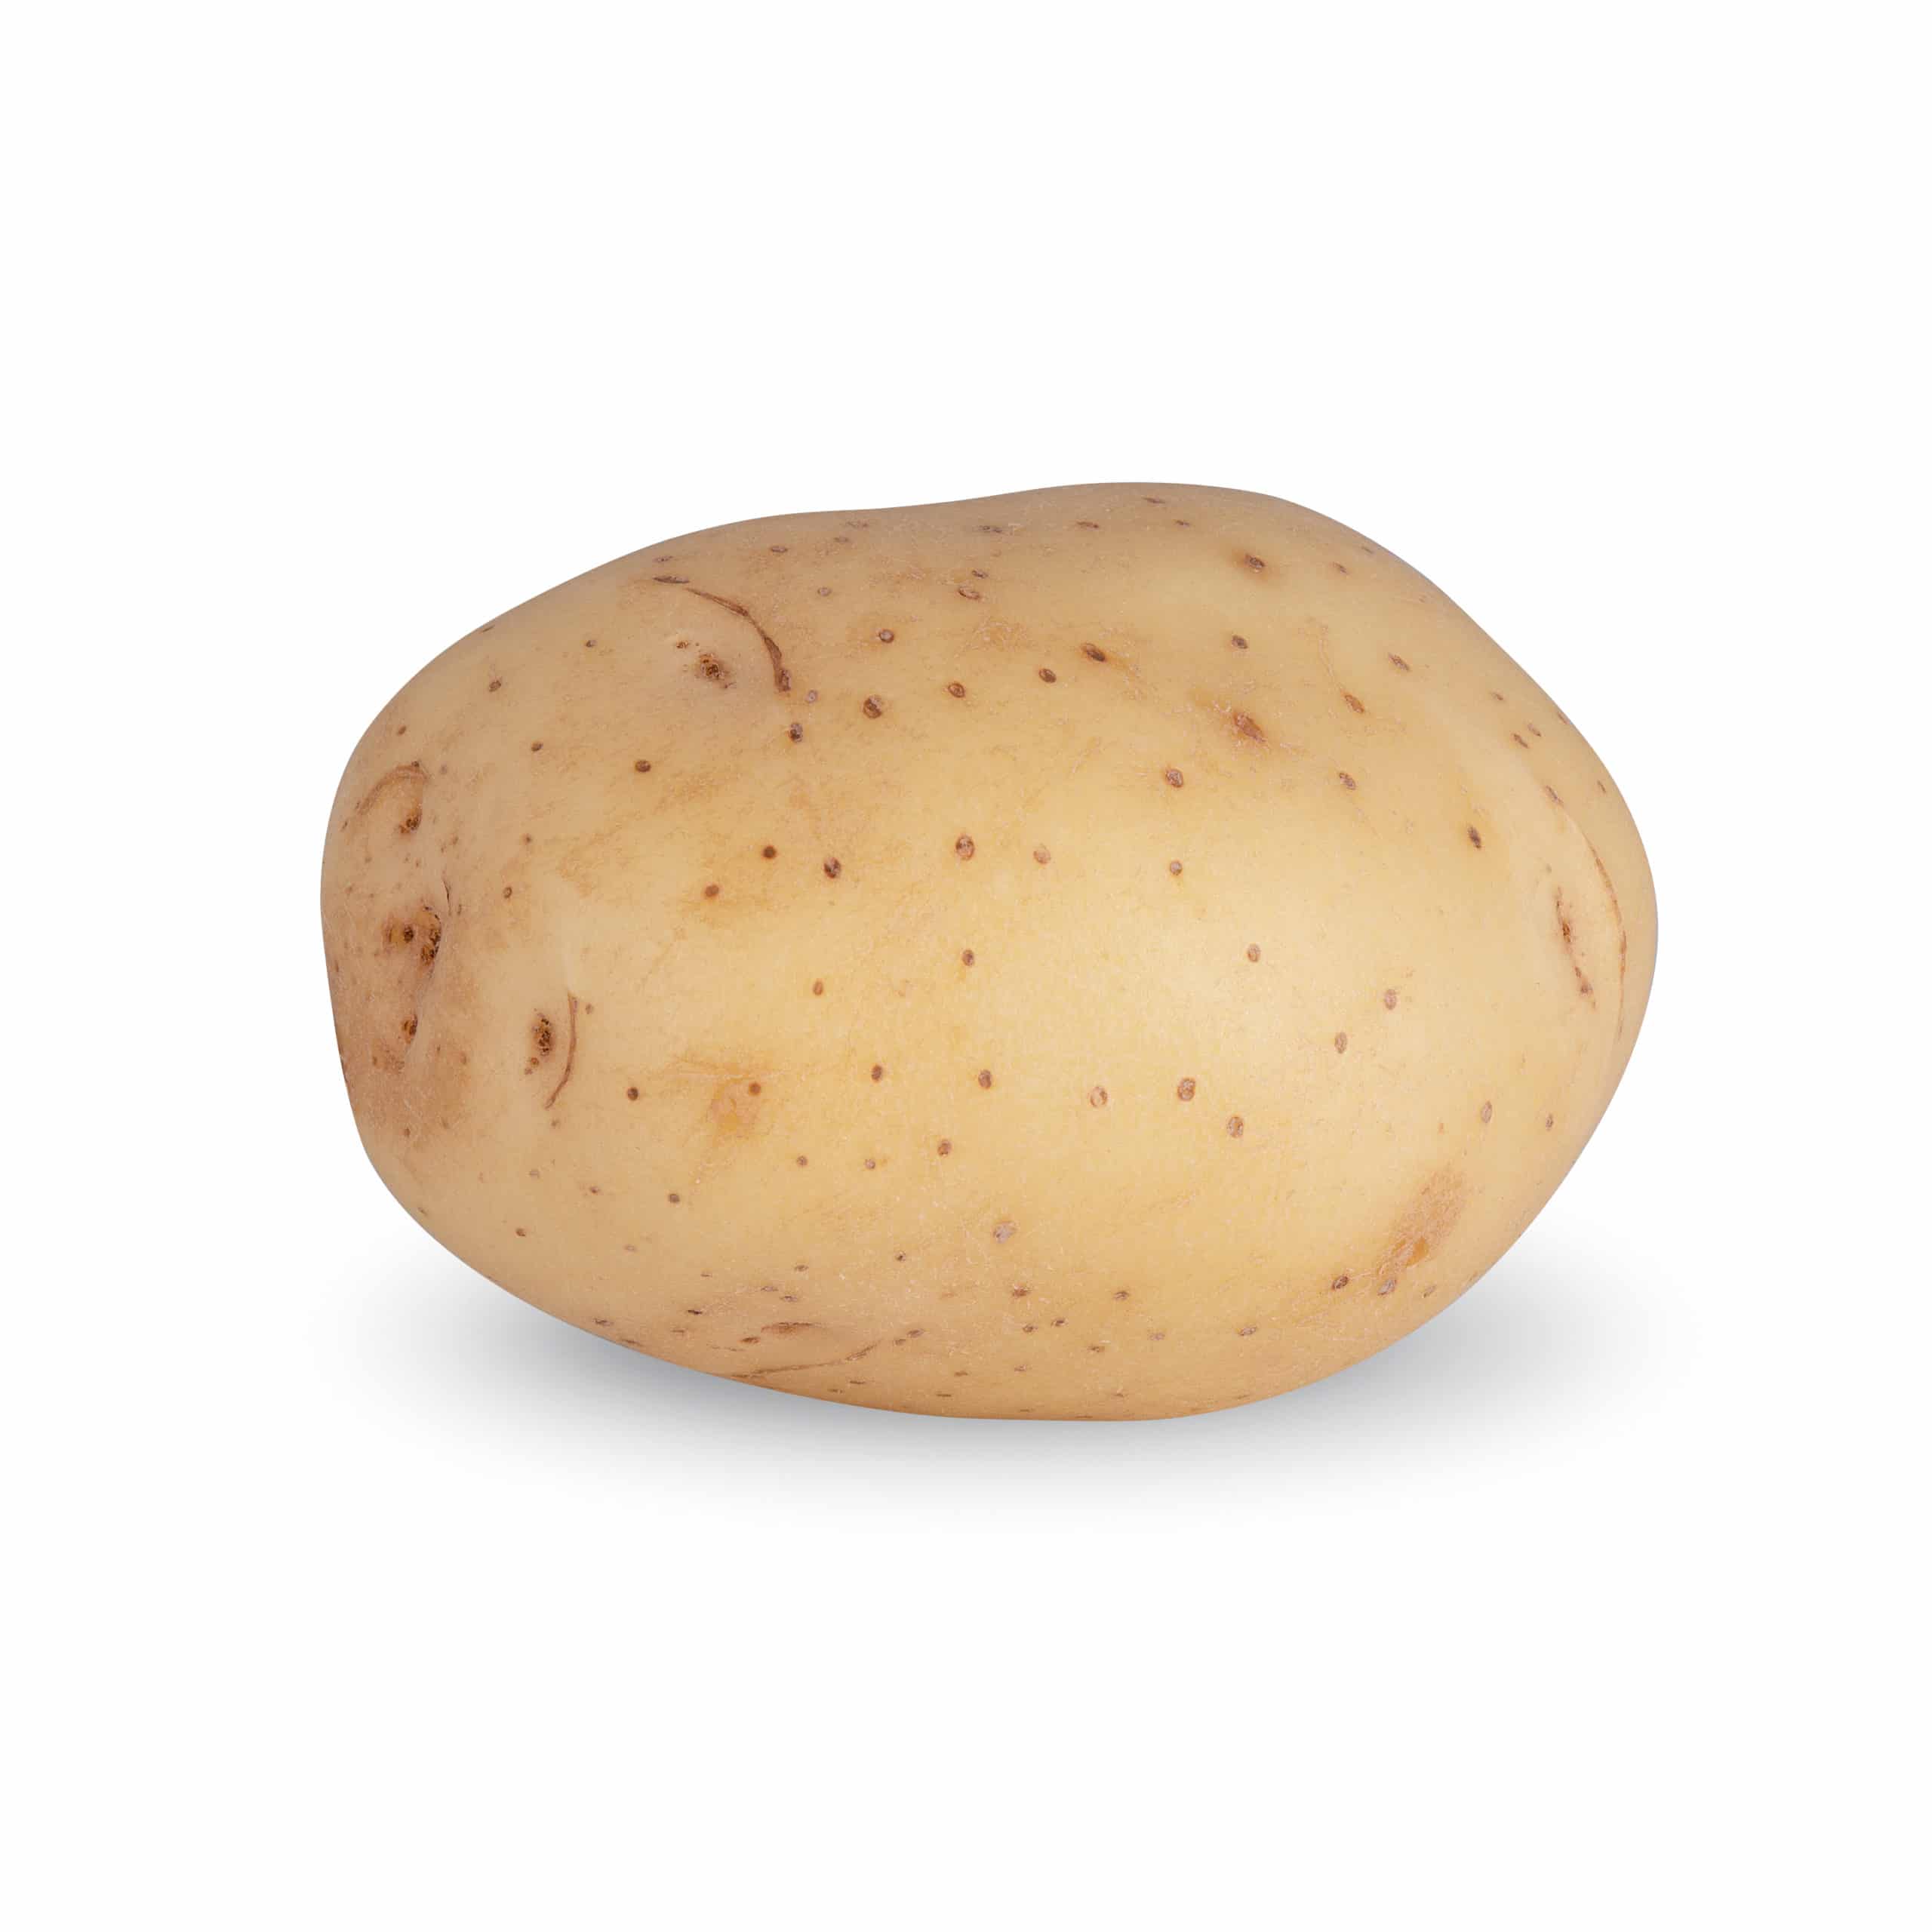 Alouette potato variety